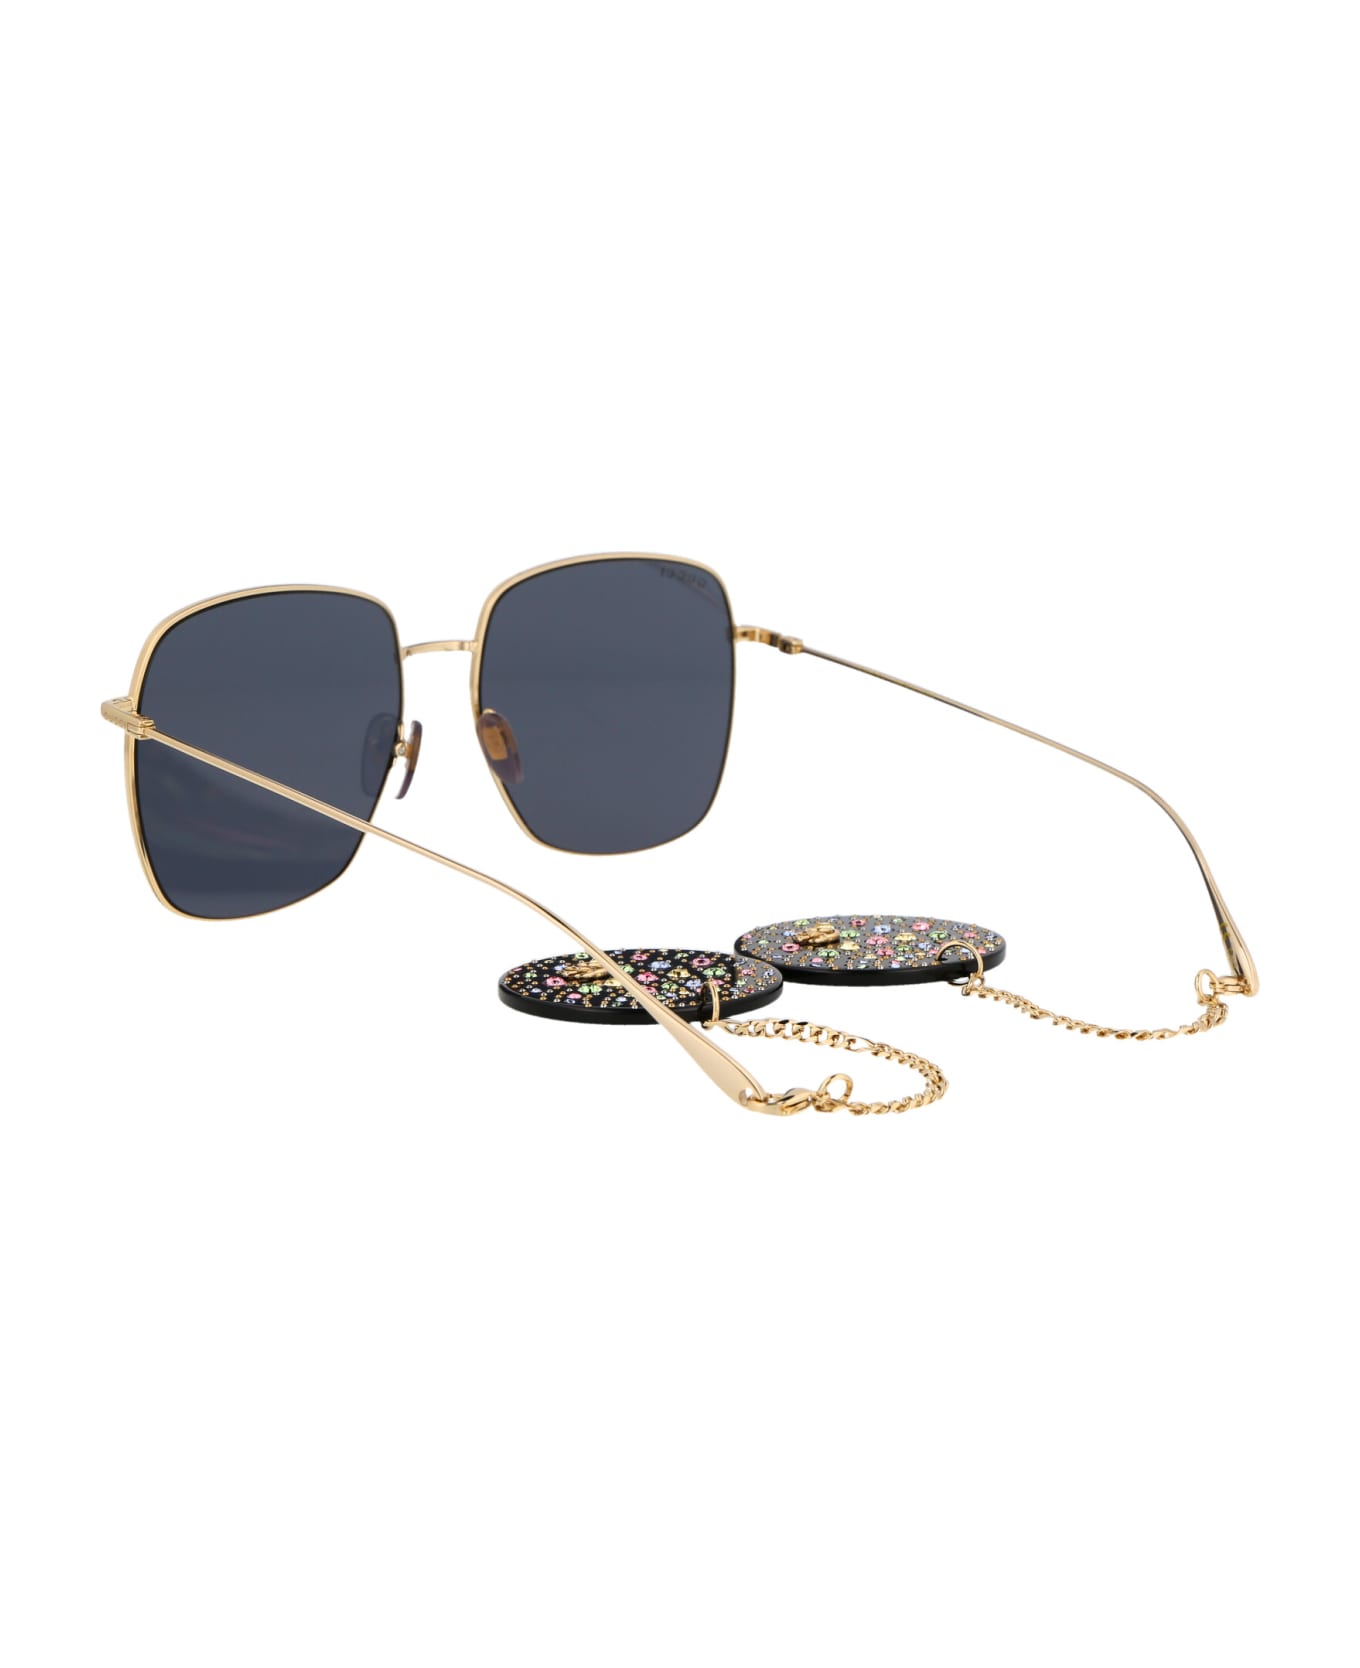 Gucci Eyewear Gg1031s Sunglasses - 009 GOLD GOLD GREY